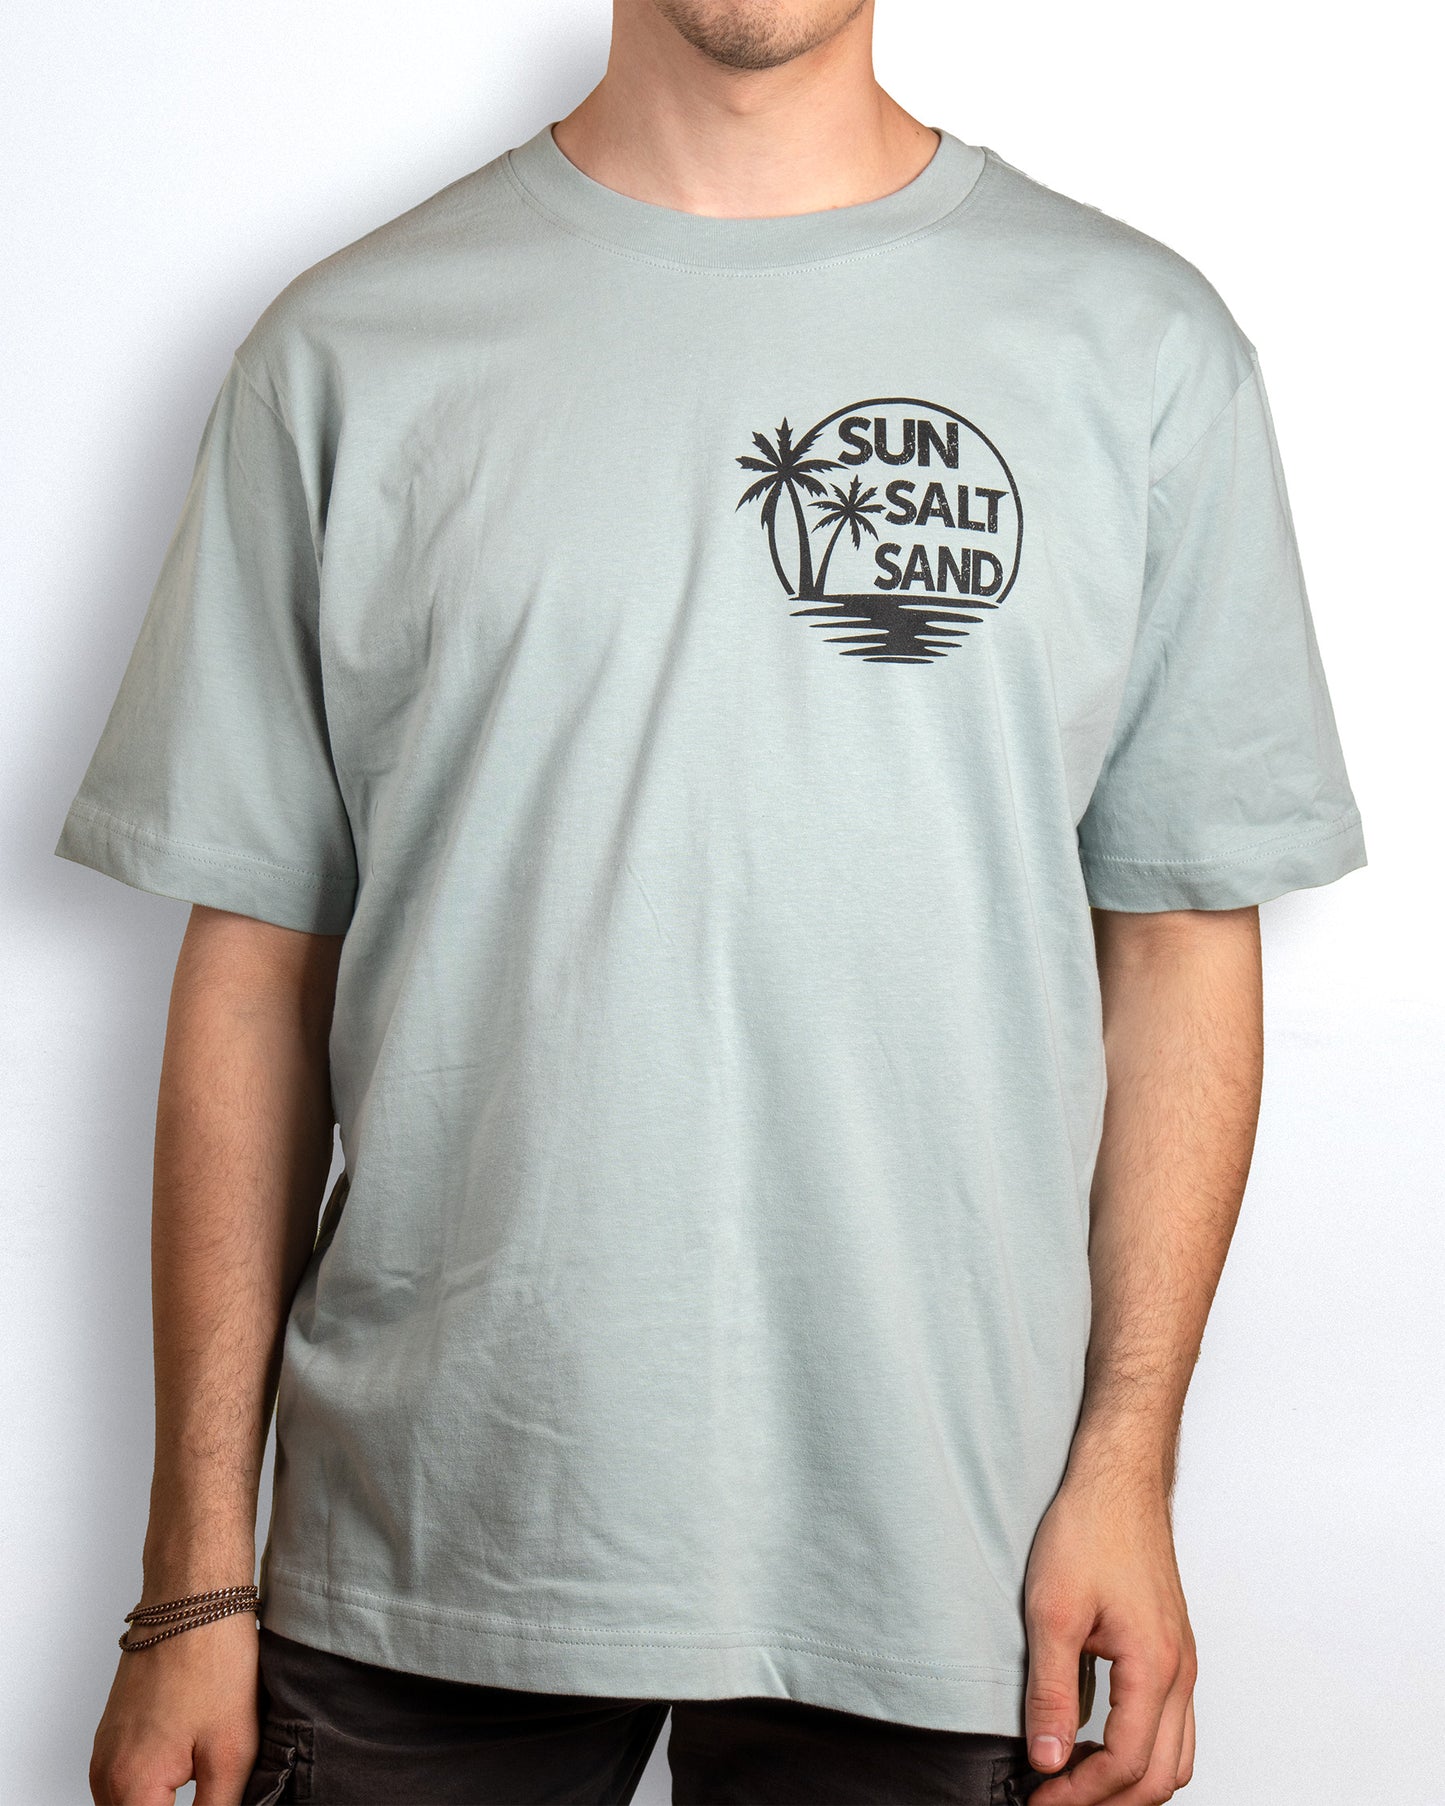 "SUN-SALT-SAND" OVERSIZE T-SHIRT